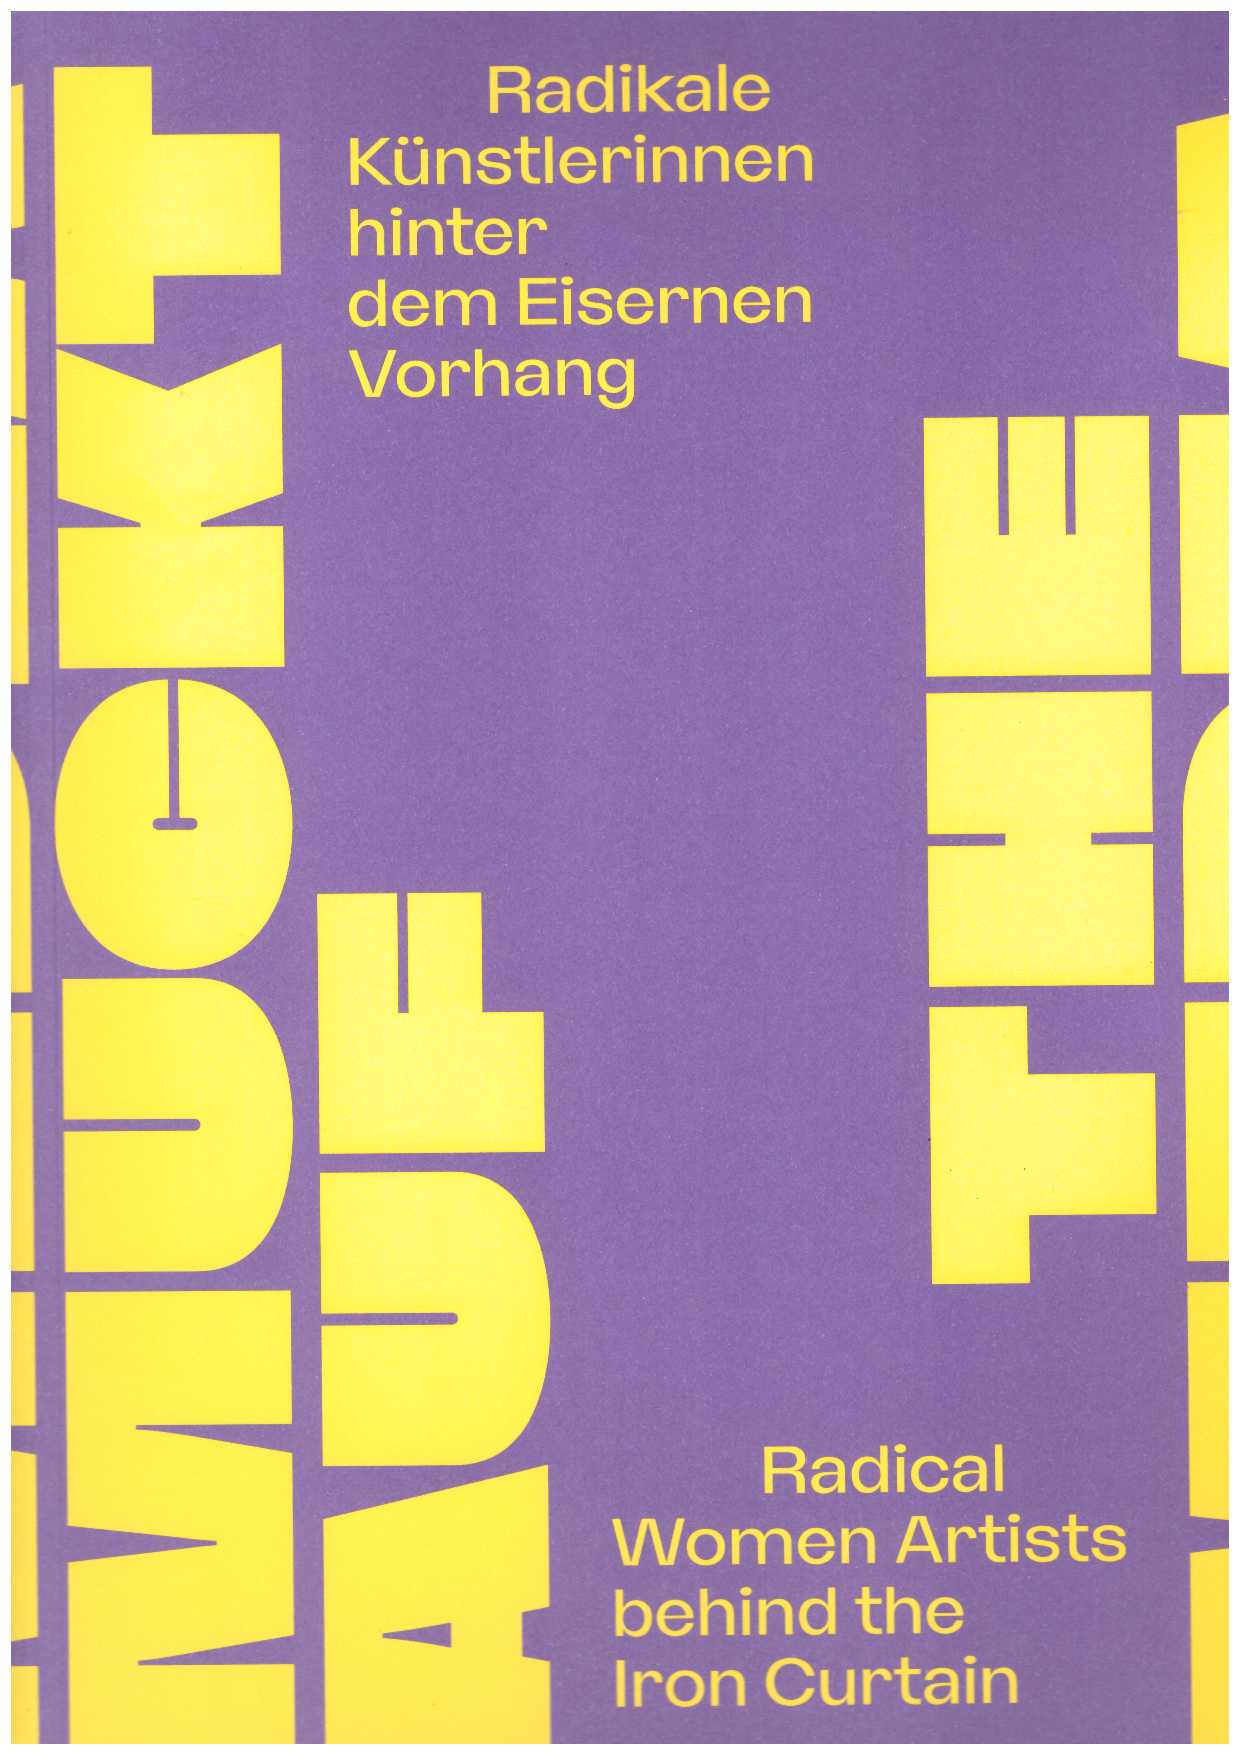 ALTMANN, Suzanne; LOZO, Katarina; WAGNER, Hilke (eds.) - The Medea Insurrection. Radical Women Artists Behind the Iron Curtain